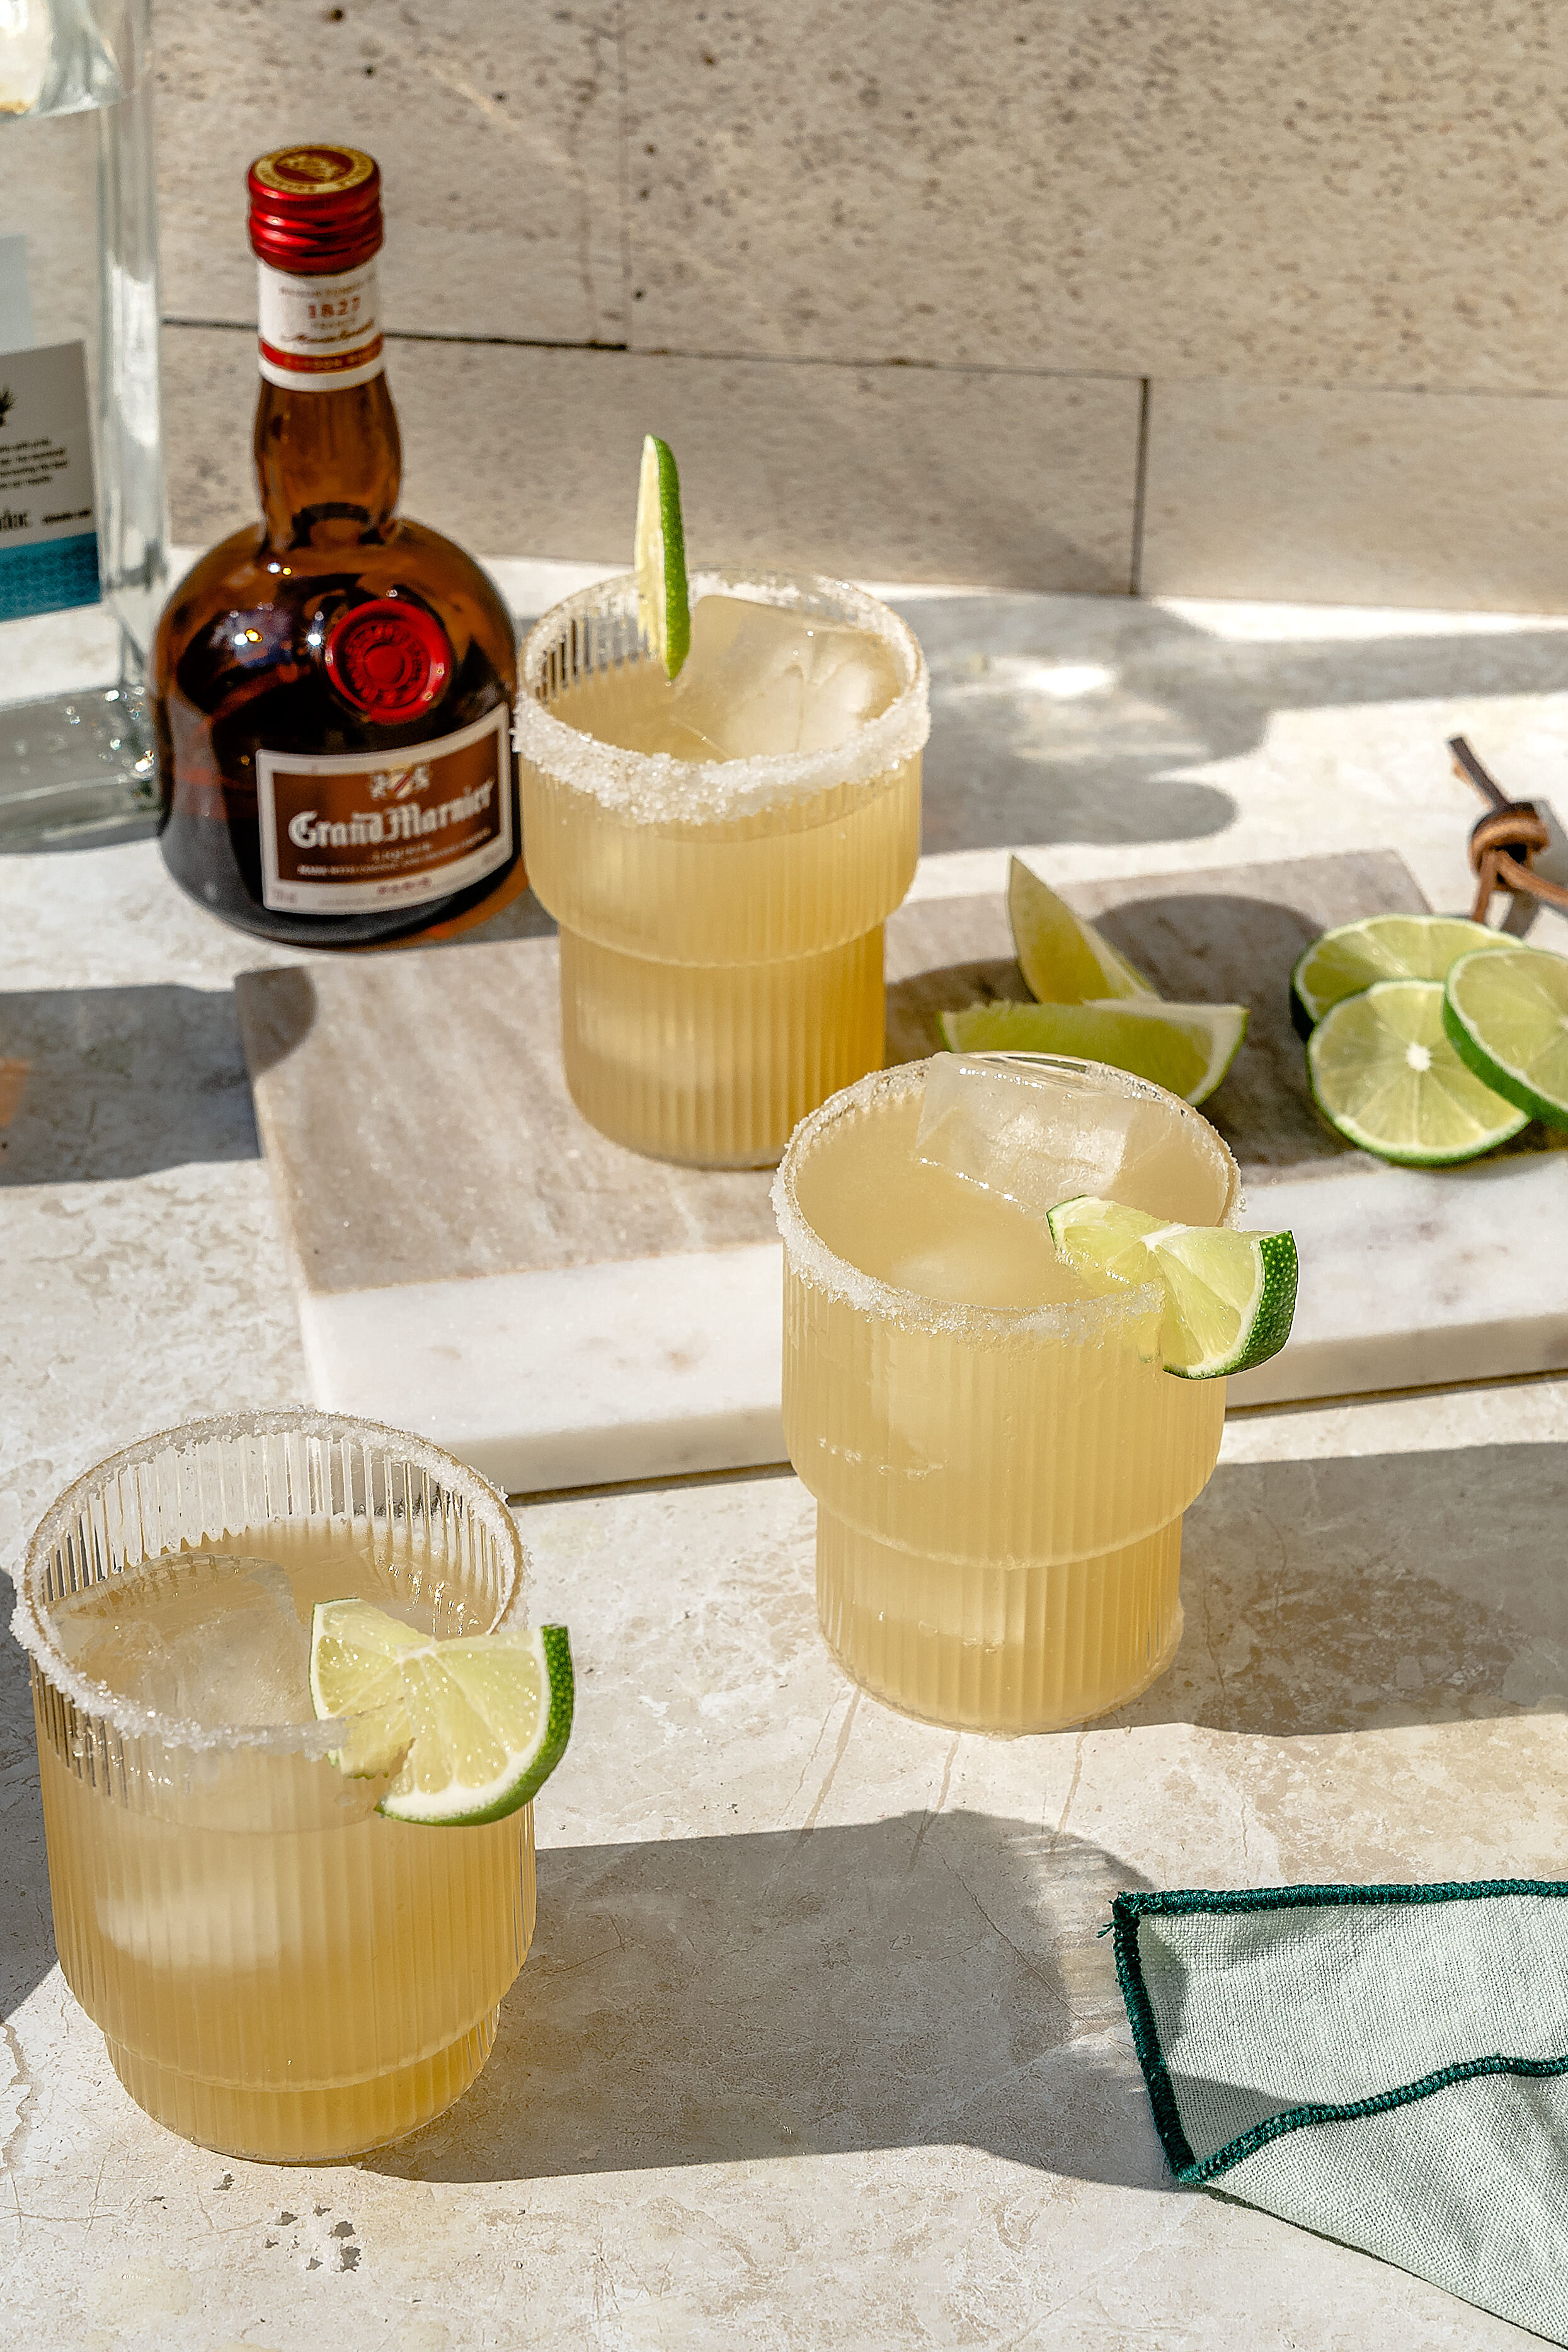 The Secret to Summer Margaritas is Grand Marnier